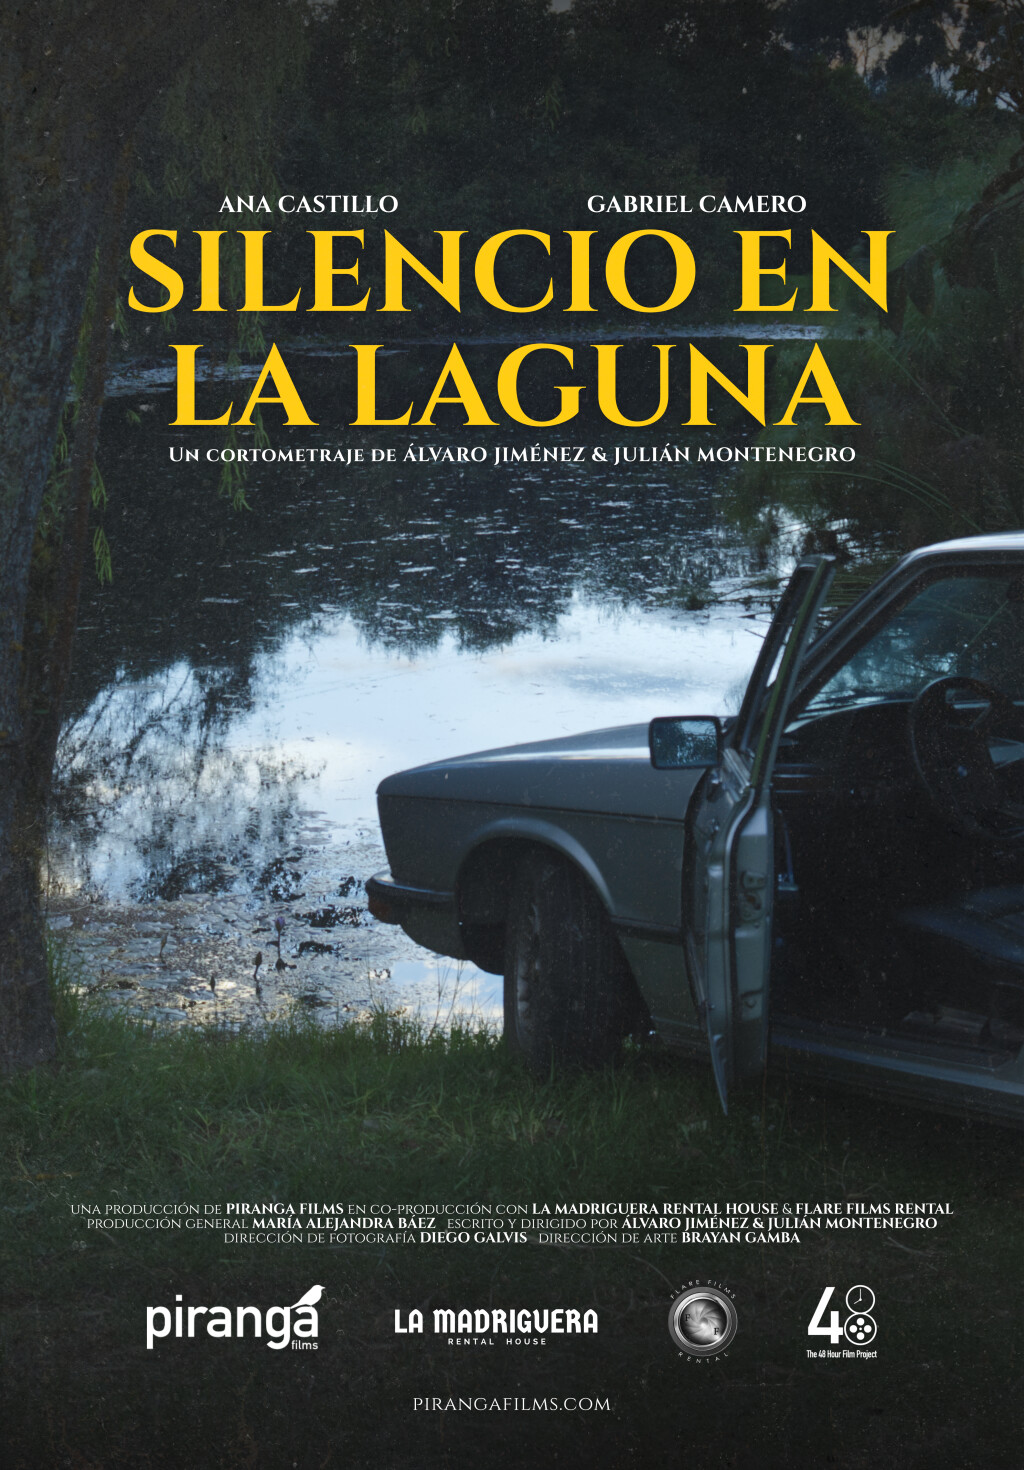 Filmposter for Silencio en la laguna